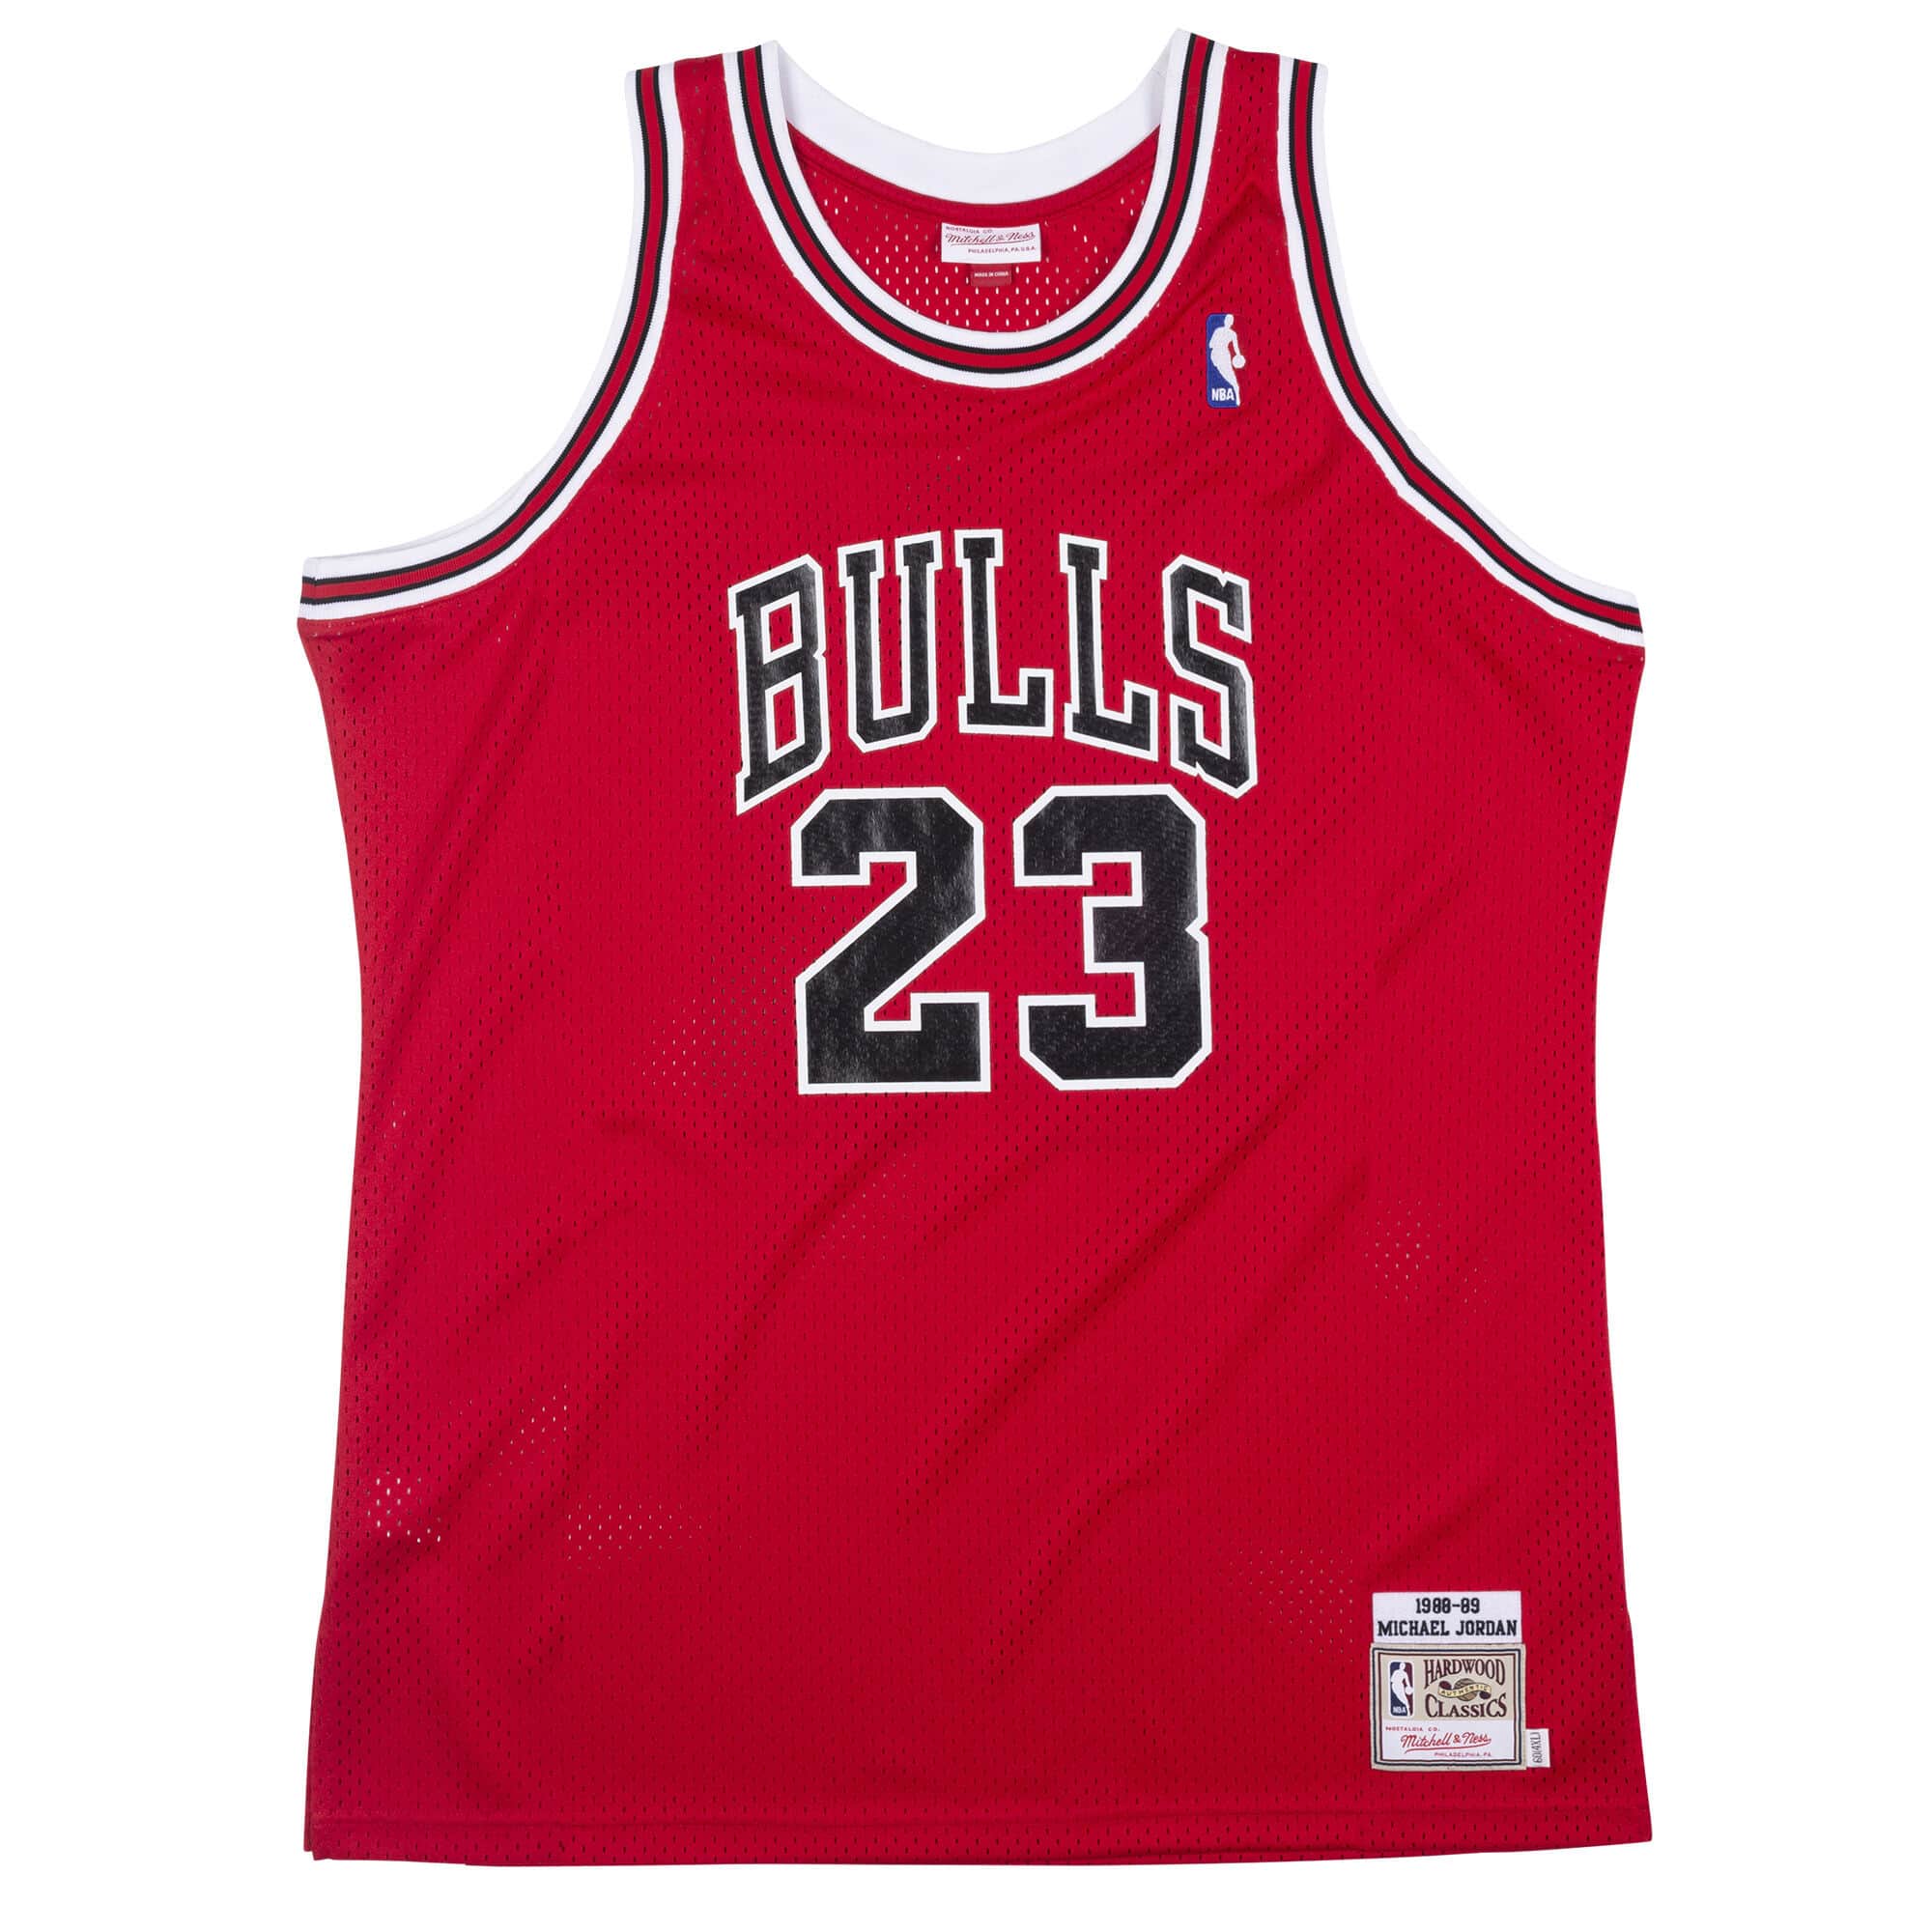 Jersey Chicago Bulls 1989-90 Michael Jordan